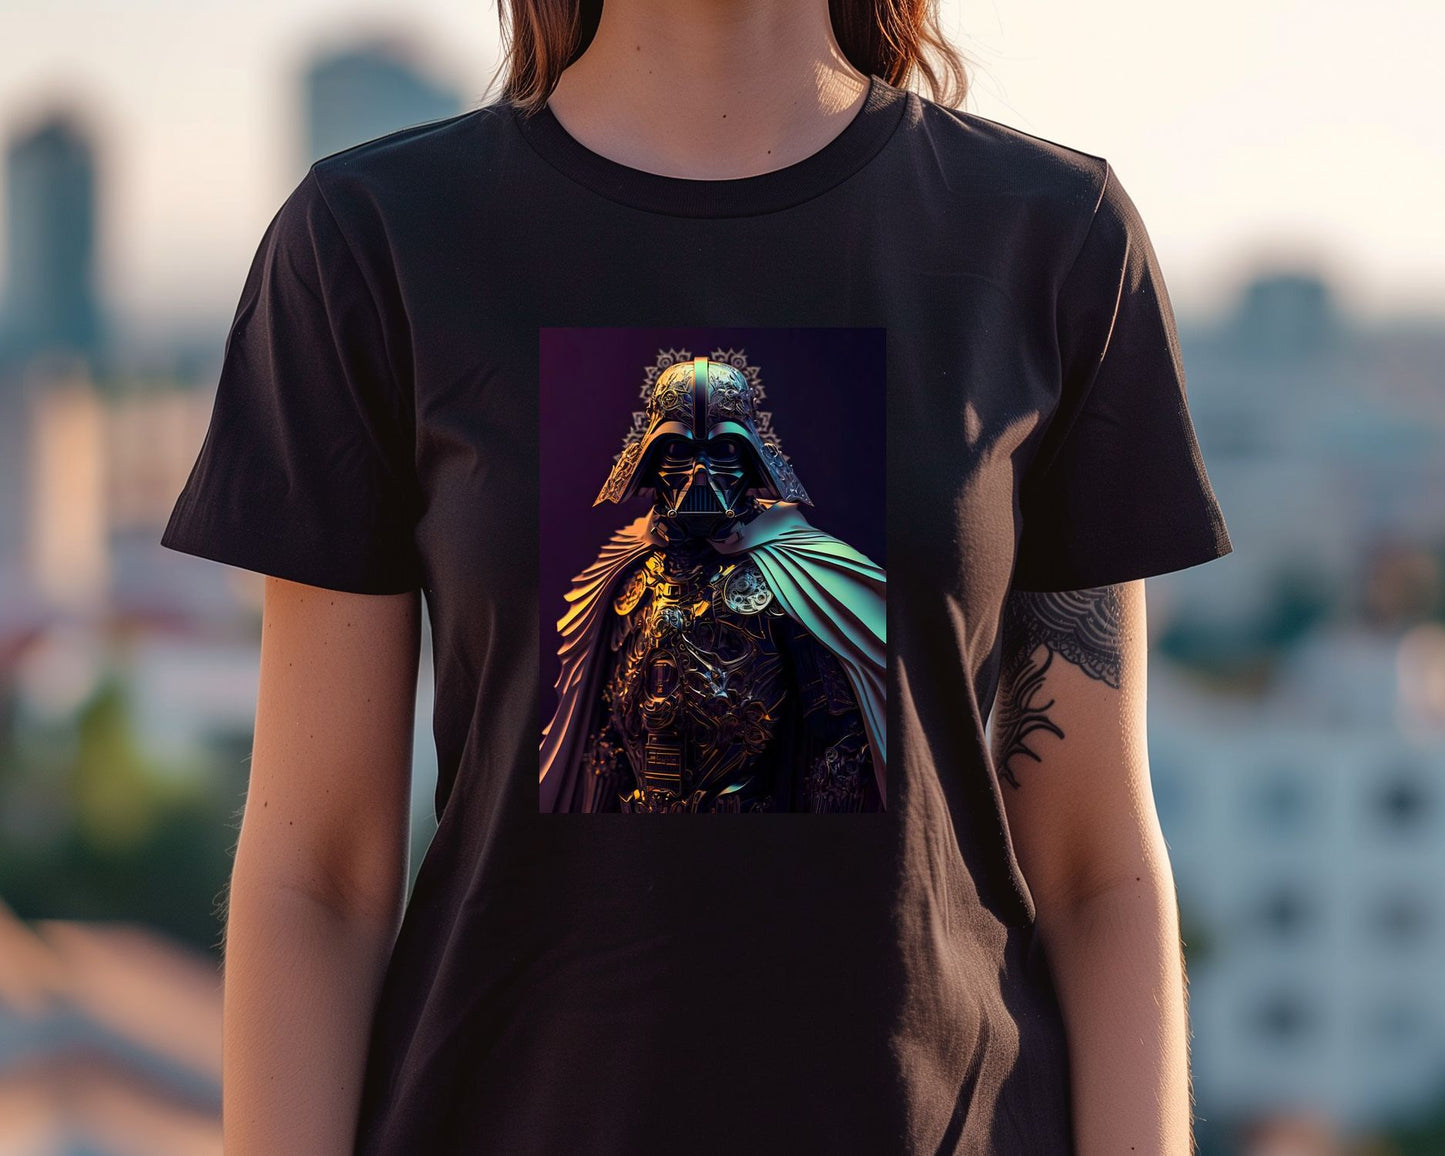 Darth Vader 4 - @LightCreative